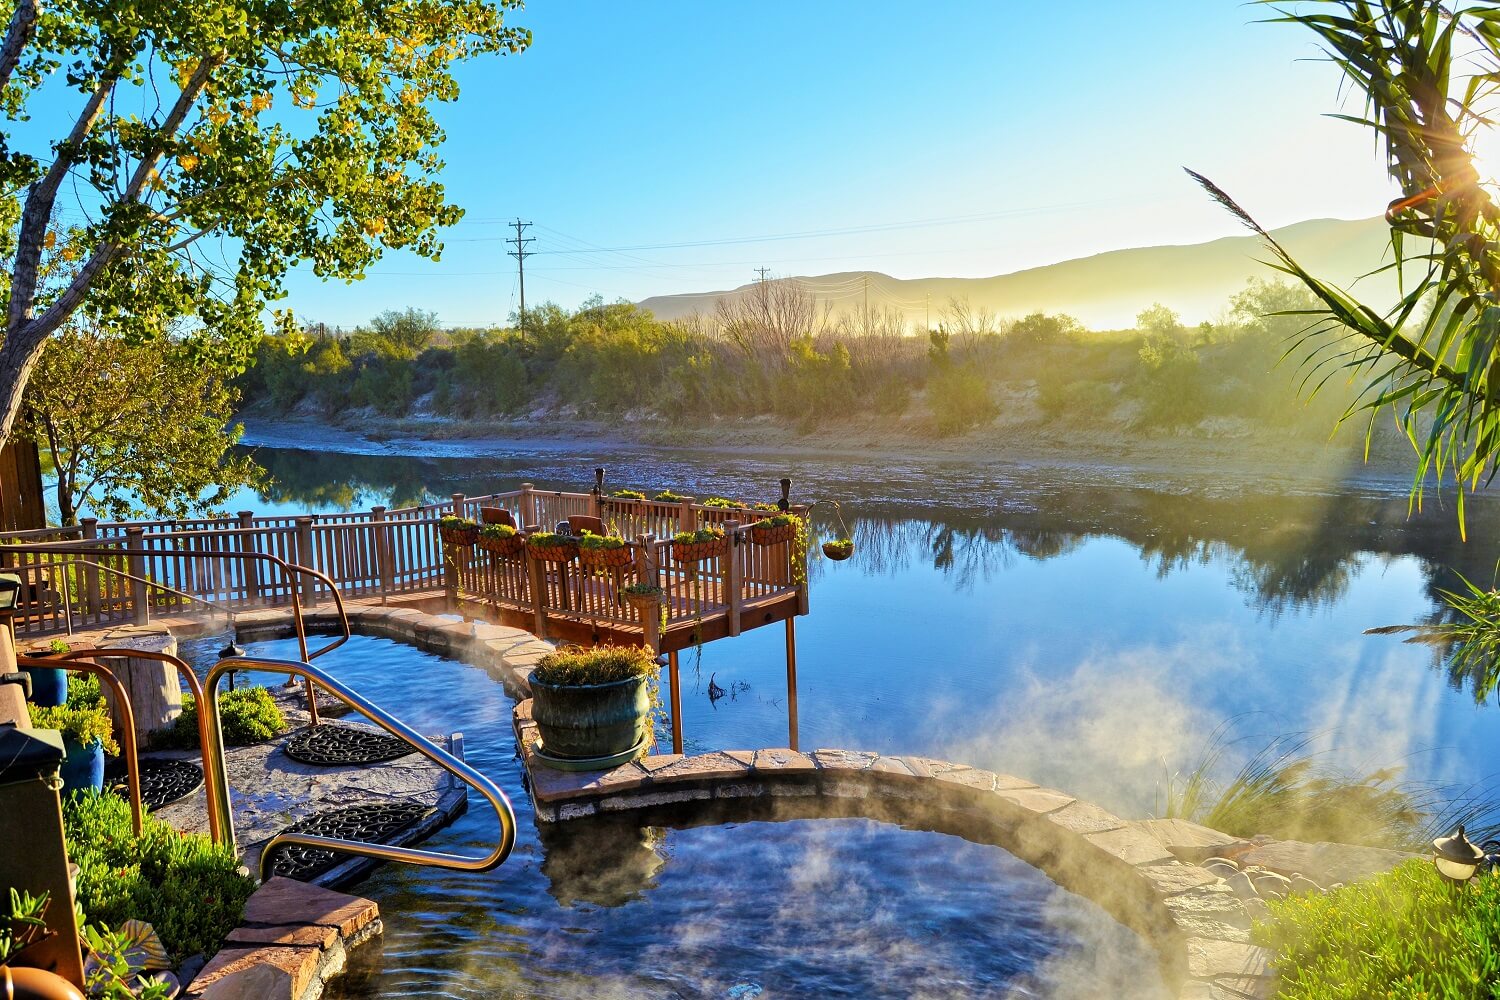 How To Soak - Riverbend Hot Springs